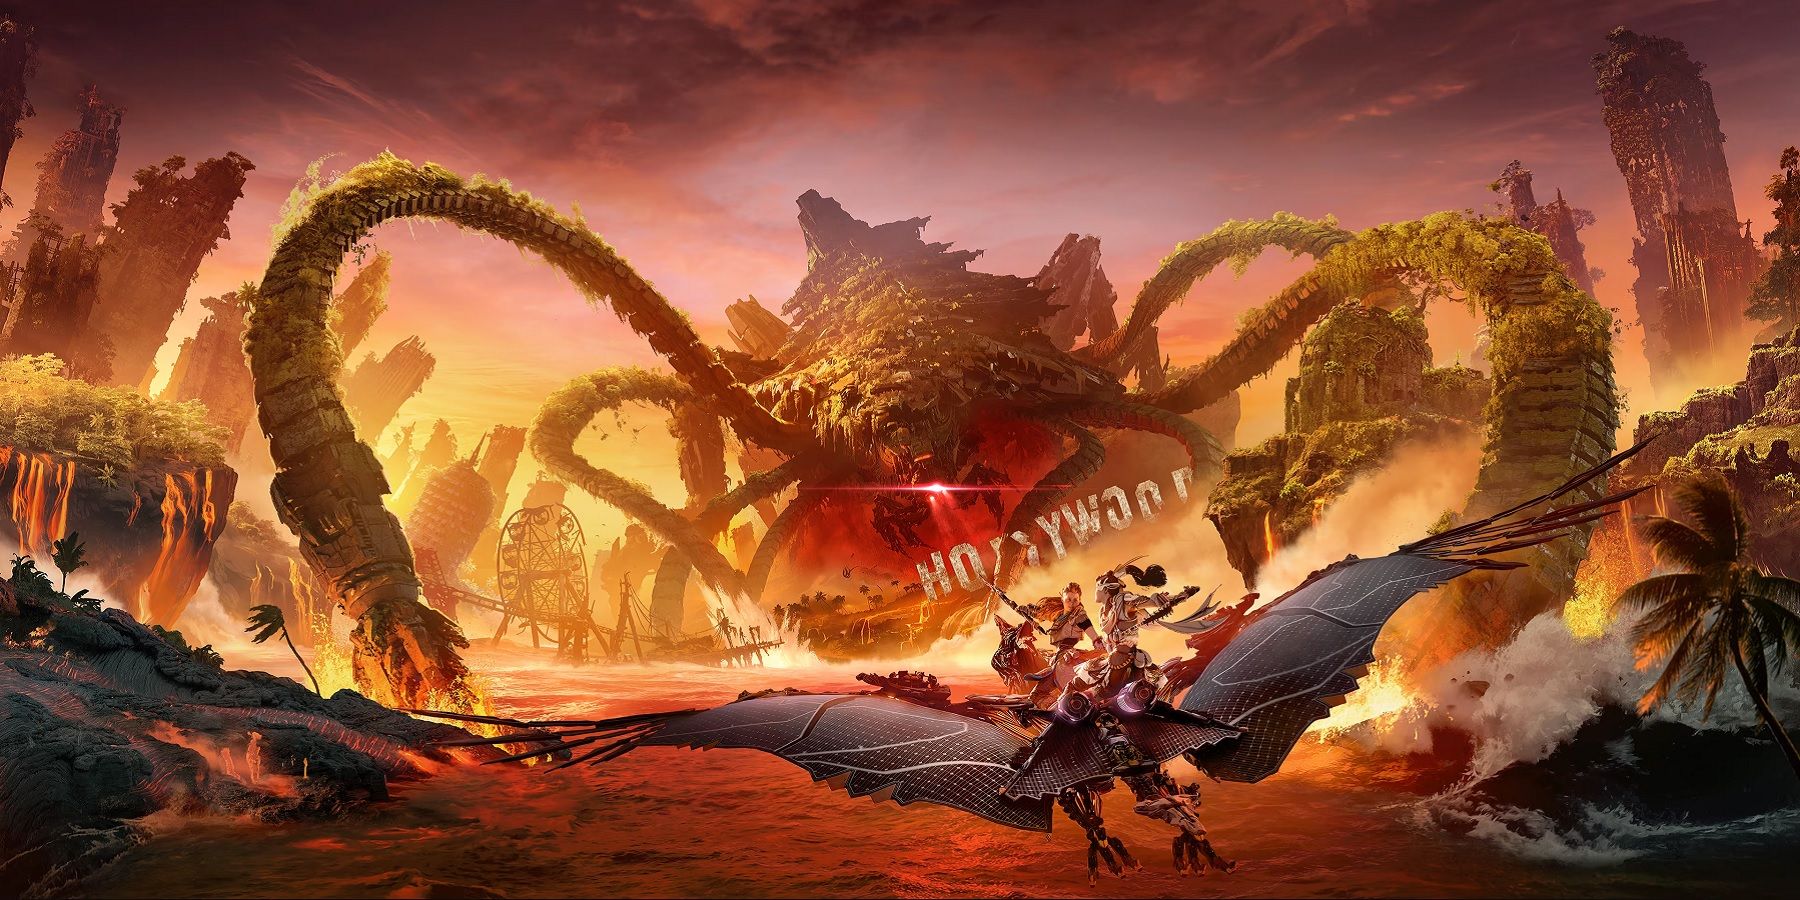 Horizon Forbidden West: Burning Shores being bombed on Metacritic